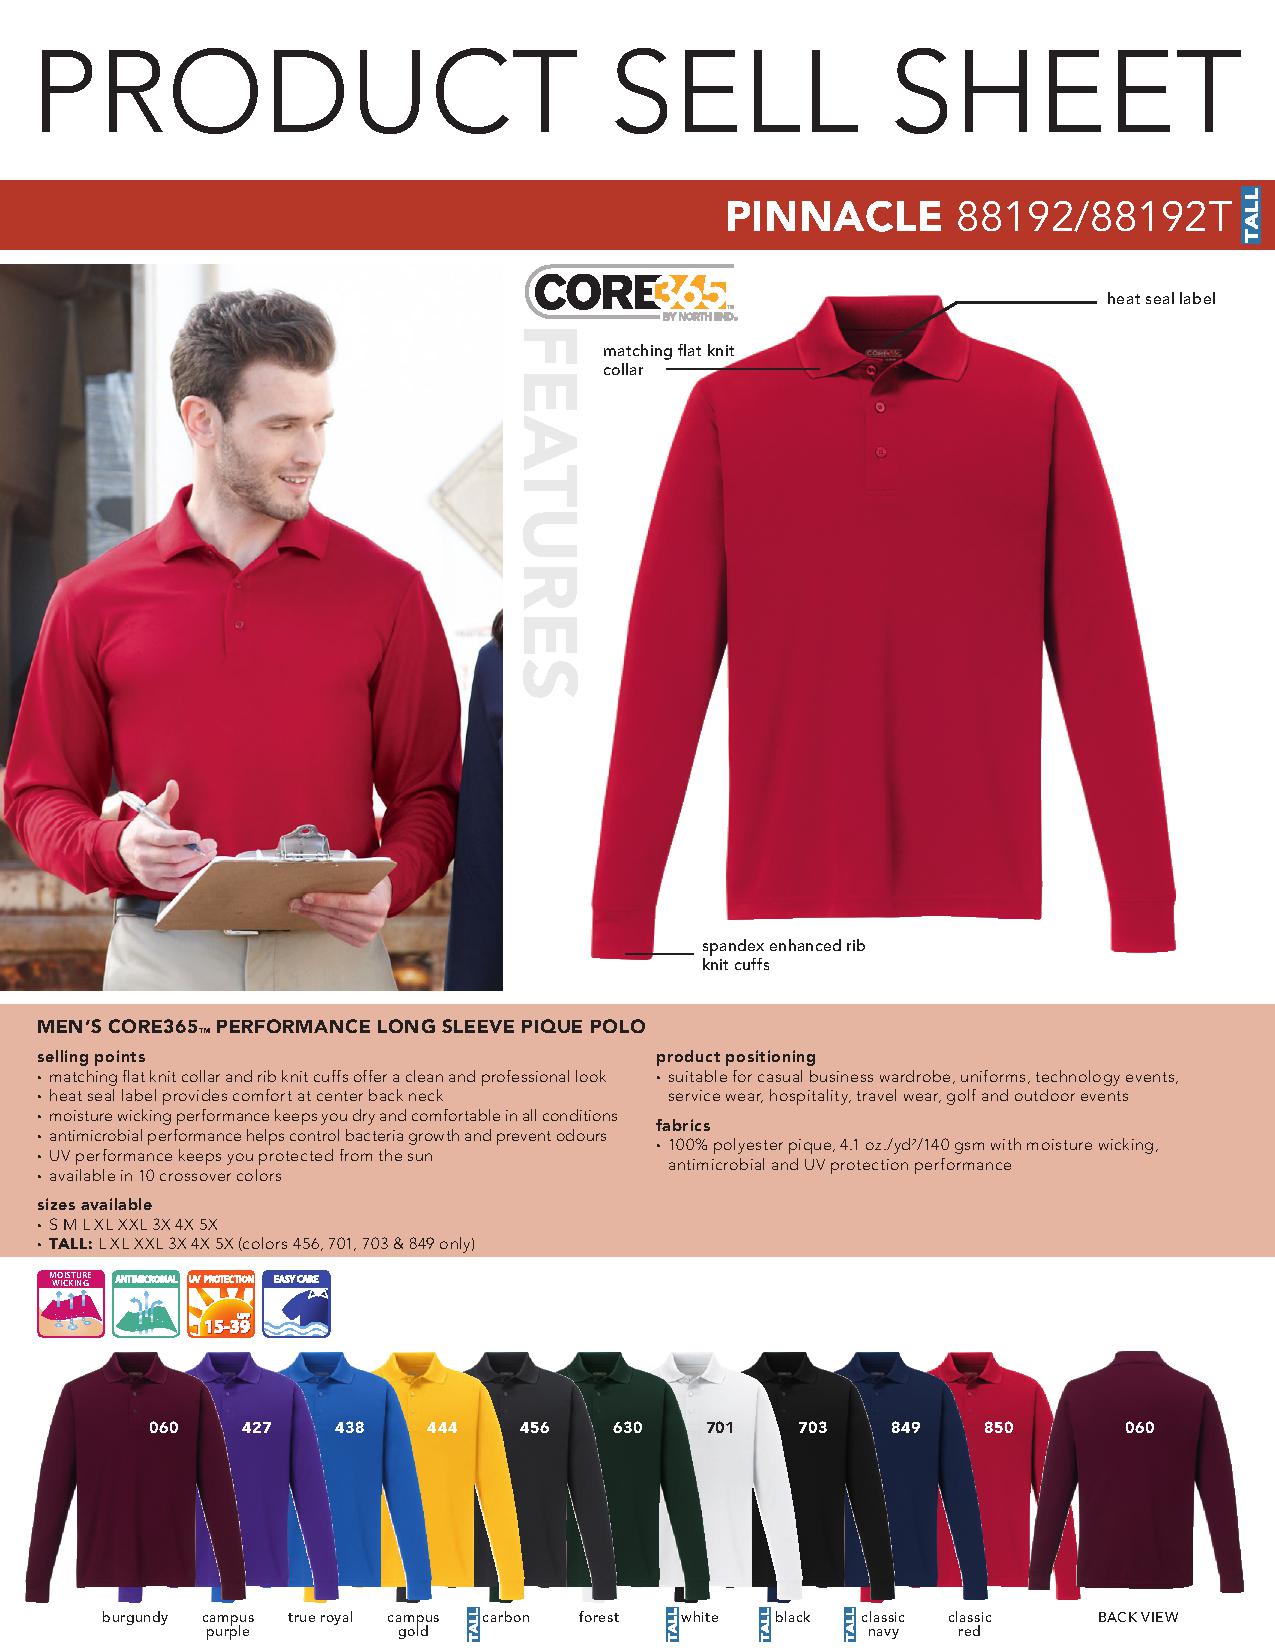 Core 365 88192 - Men's Pinnacle Performance Long Sleeve Pique Polo